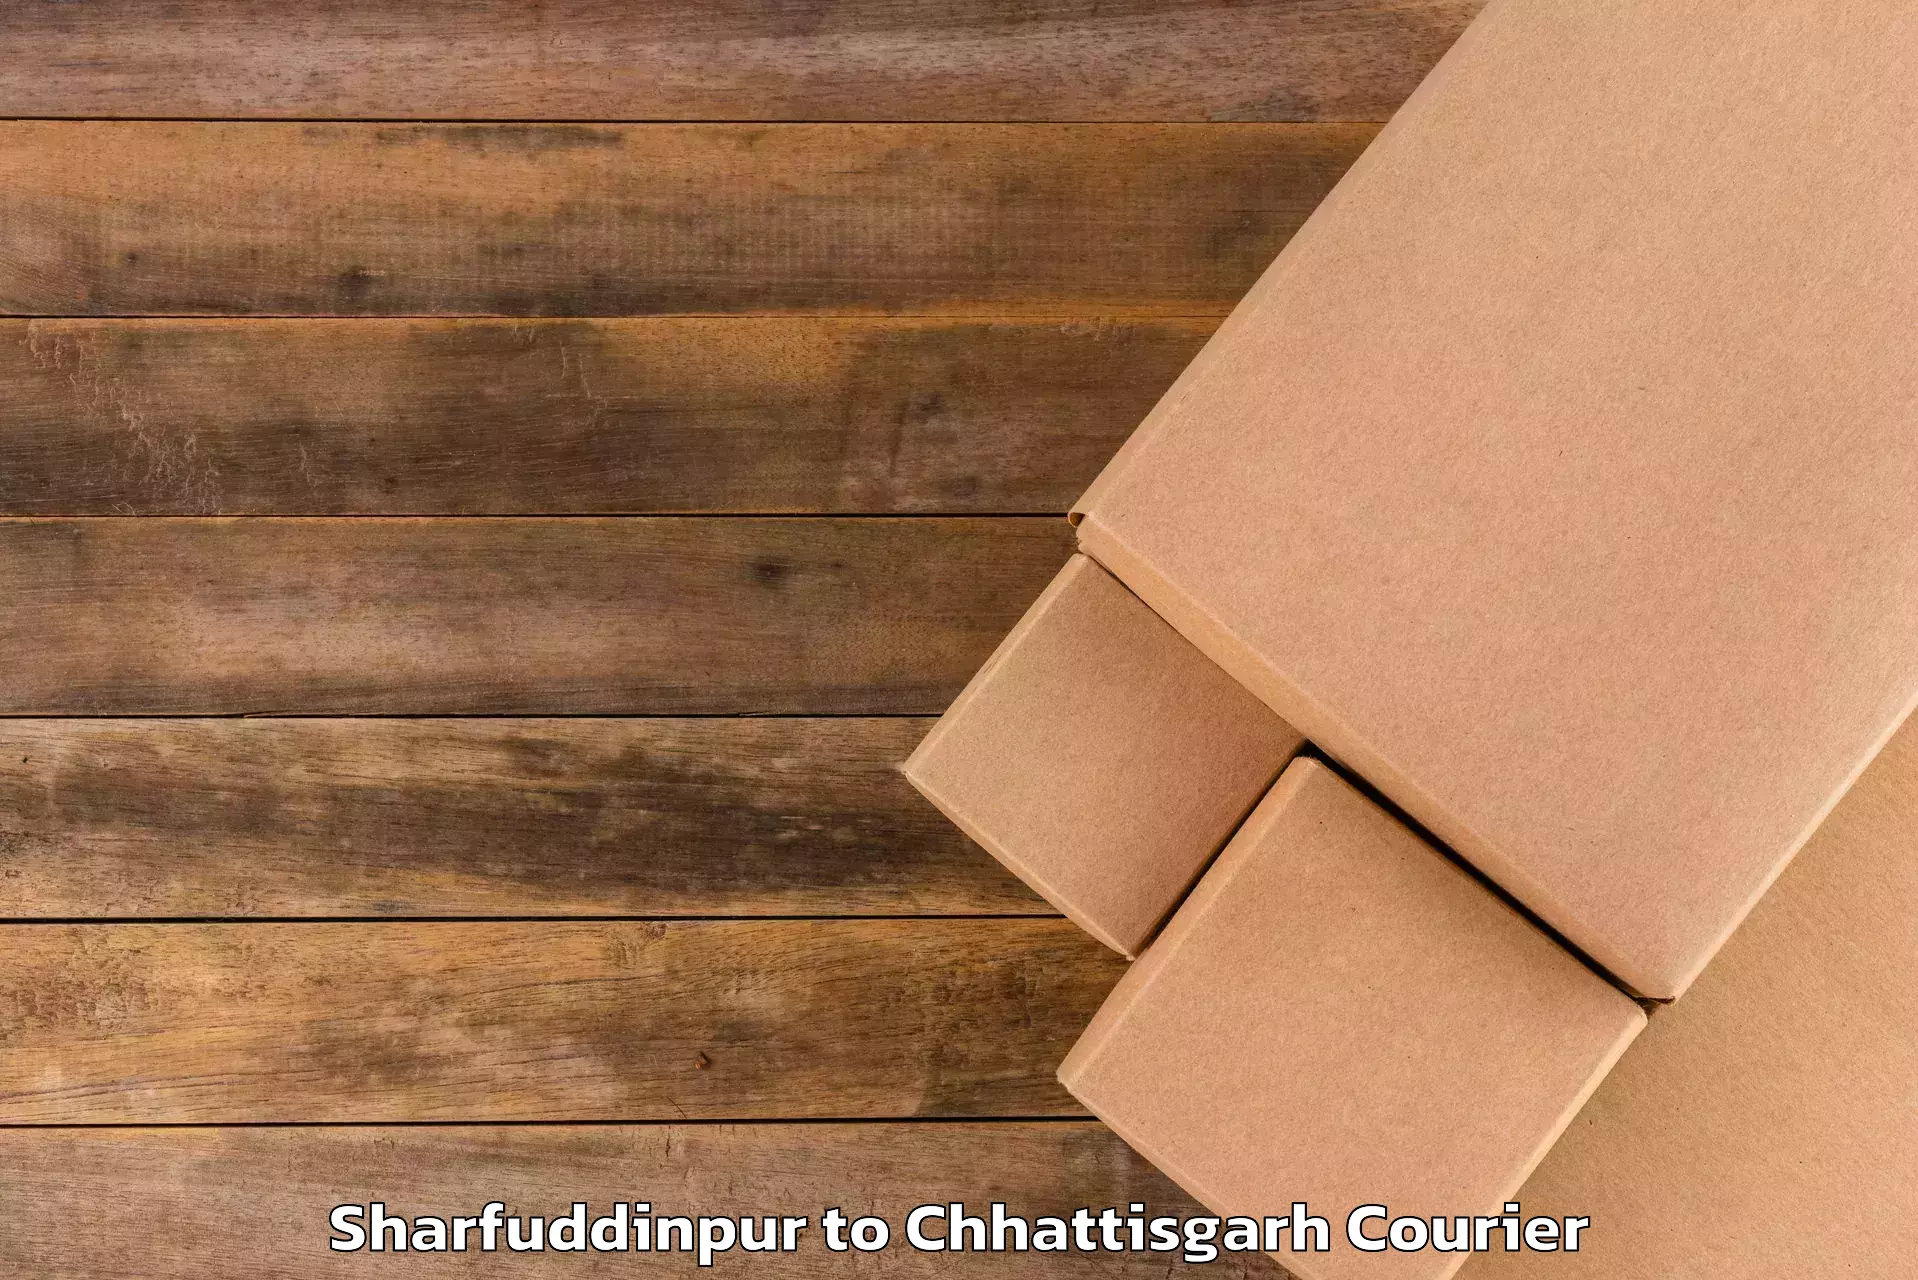 Emergency baggage service Sharfuddinpur to Patna Chhattisgarh